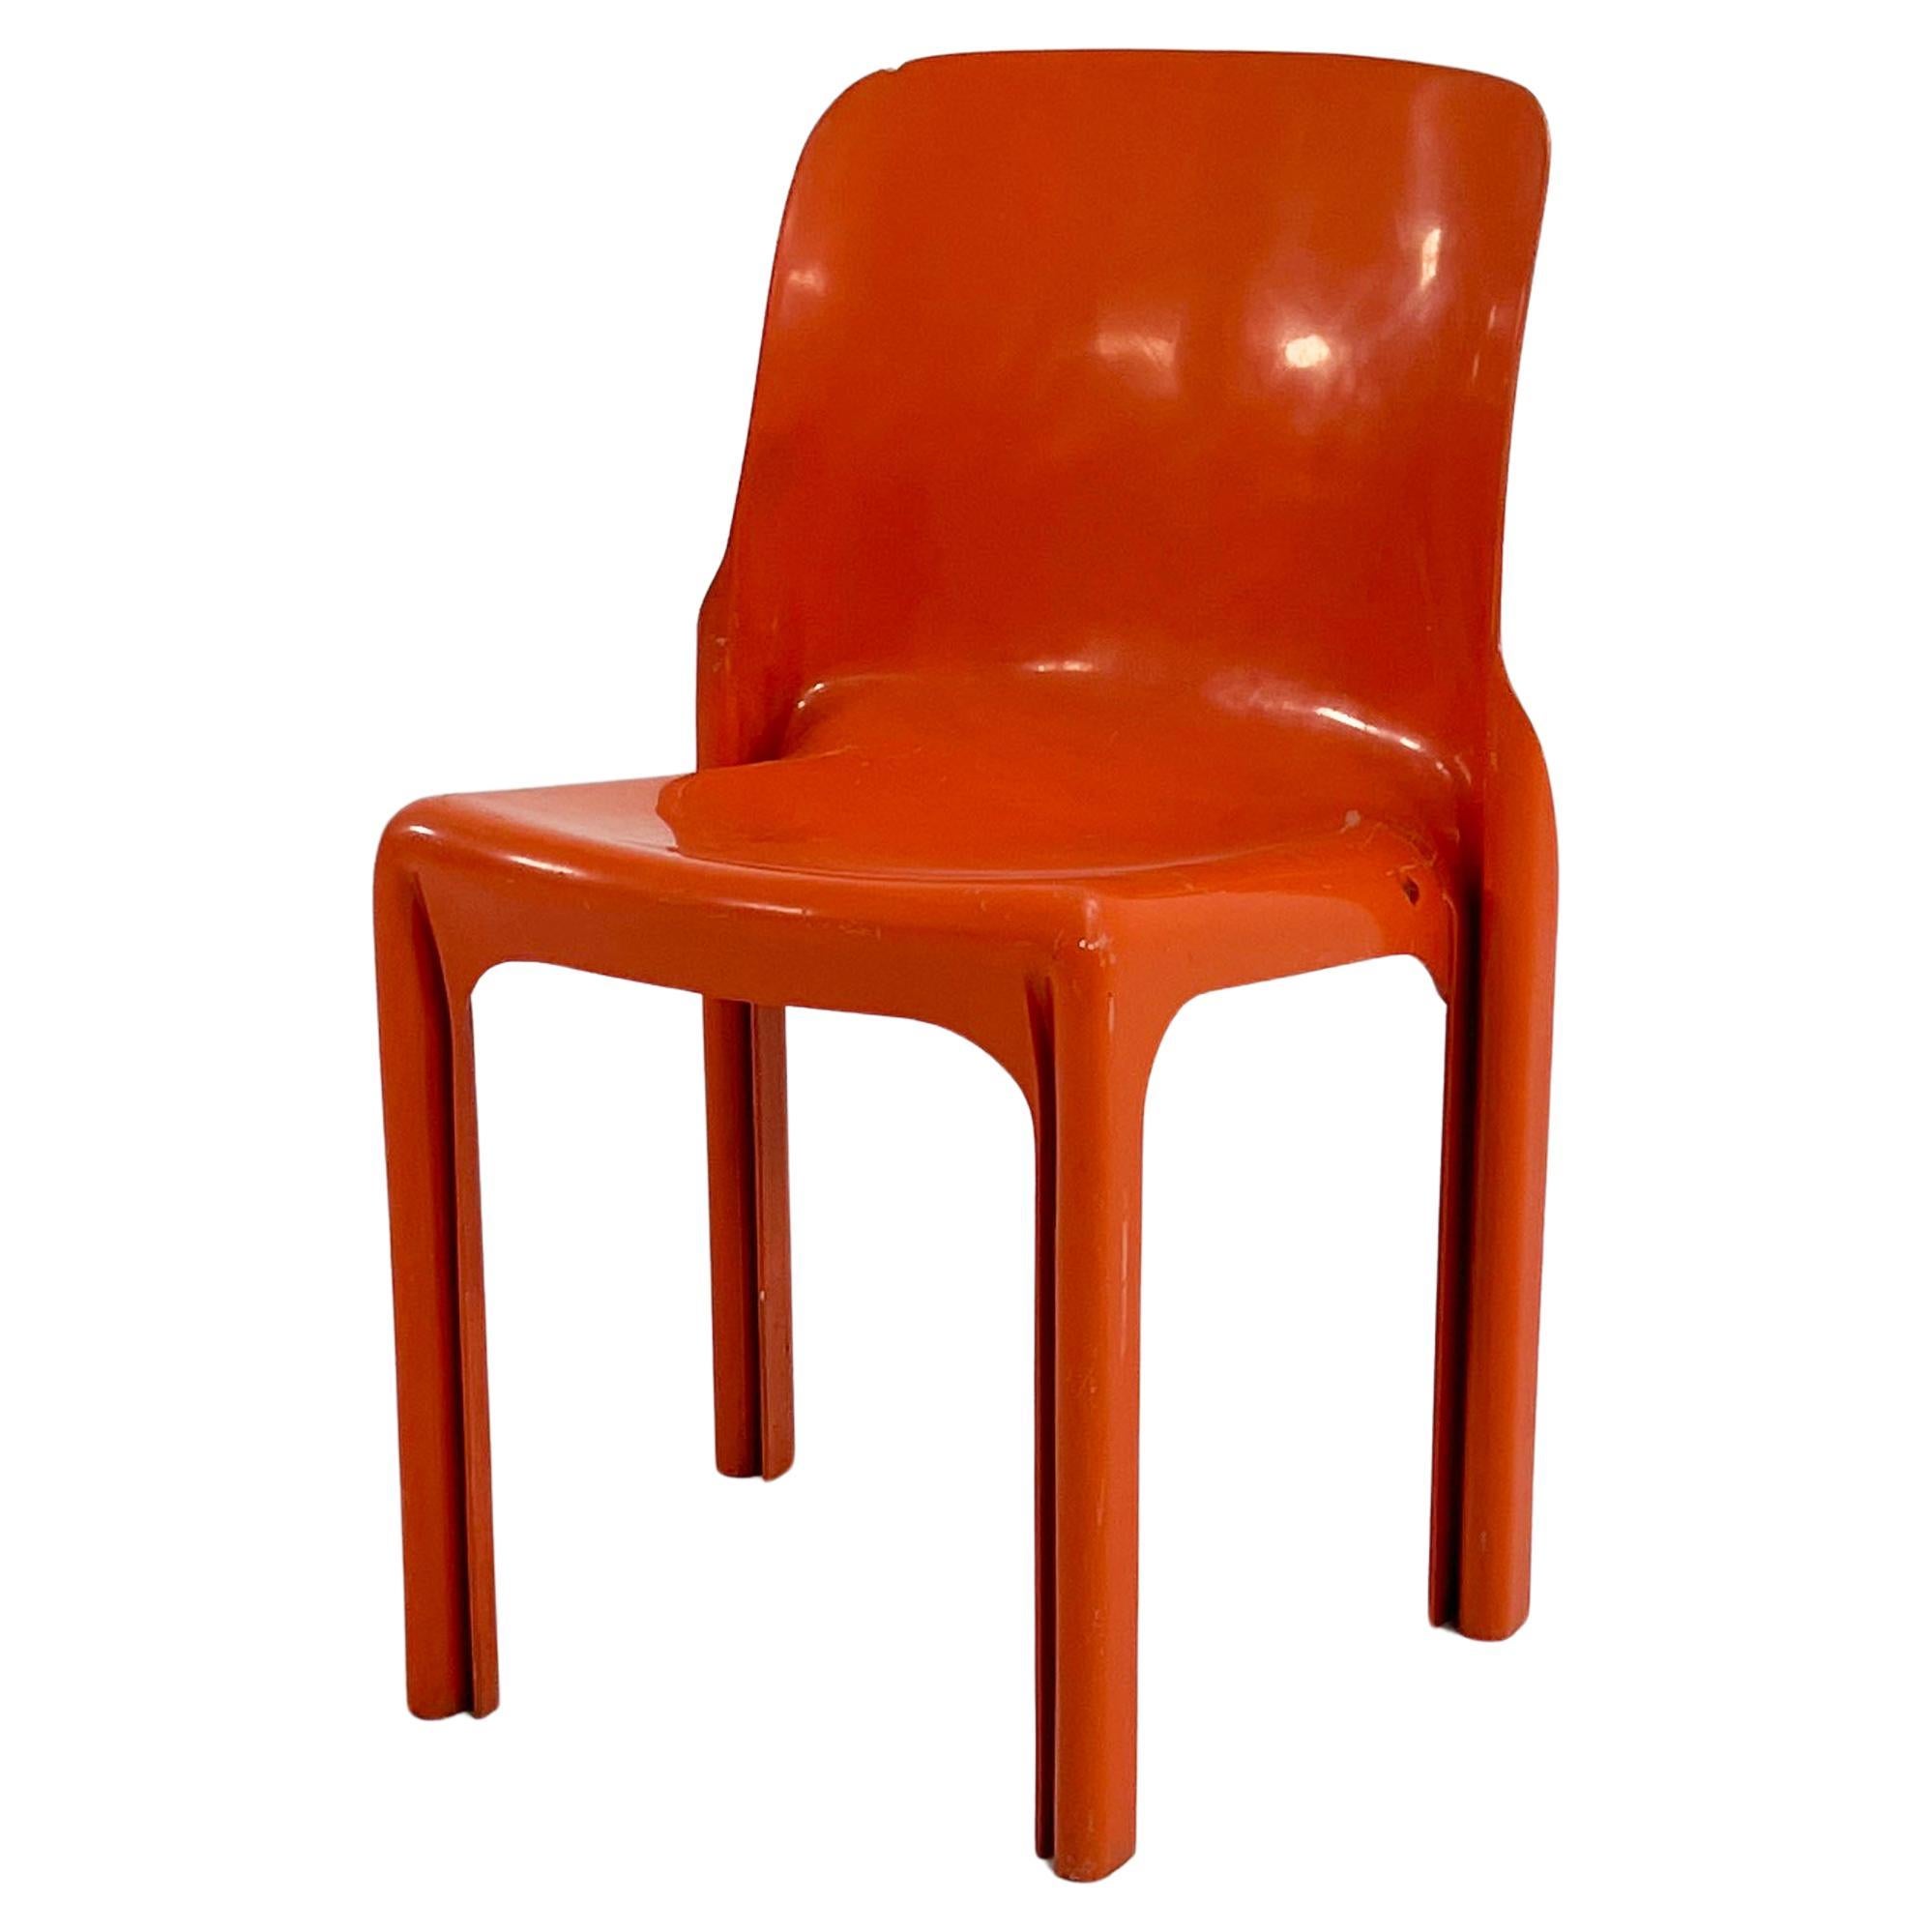 Orange Selene Chair by Vico Magistretti for Artemide, 1970s